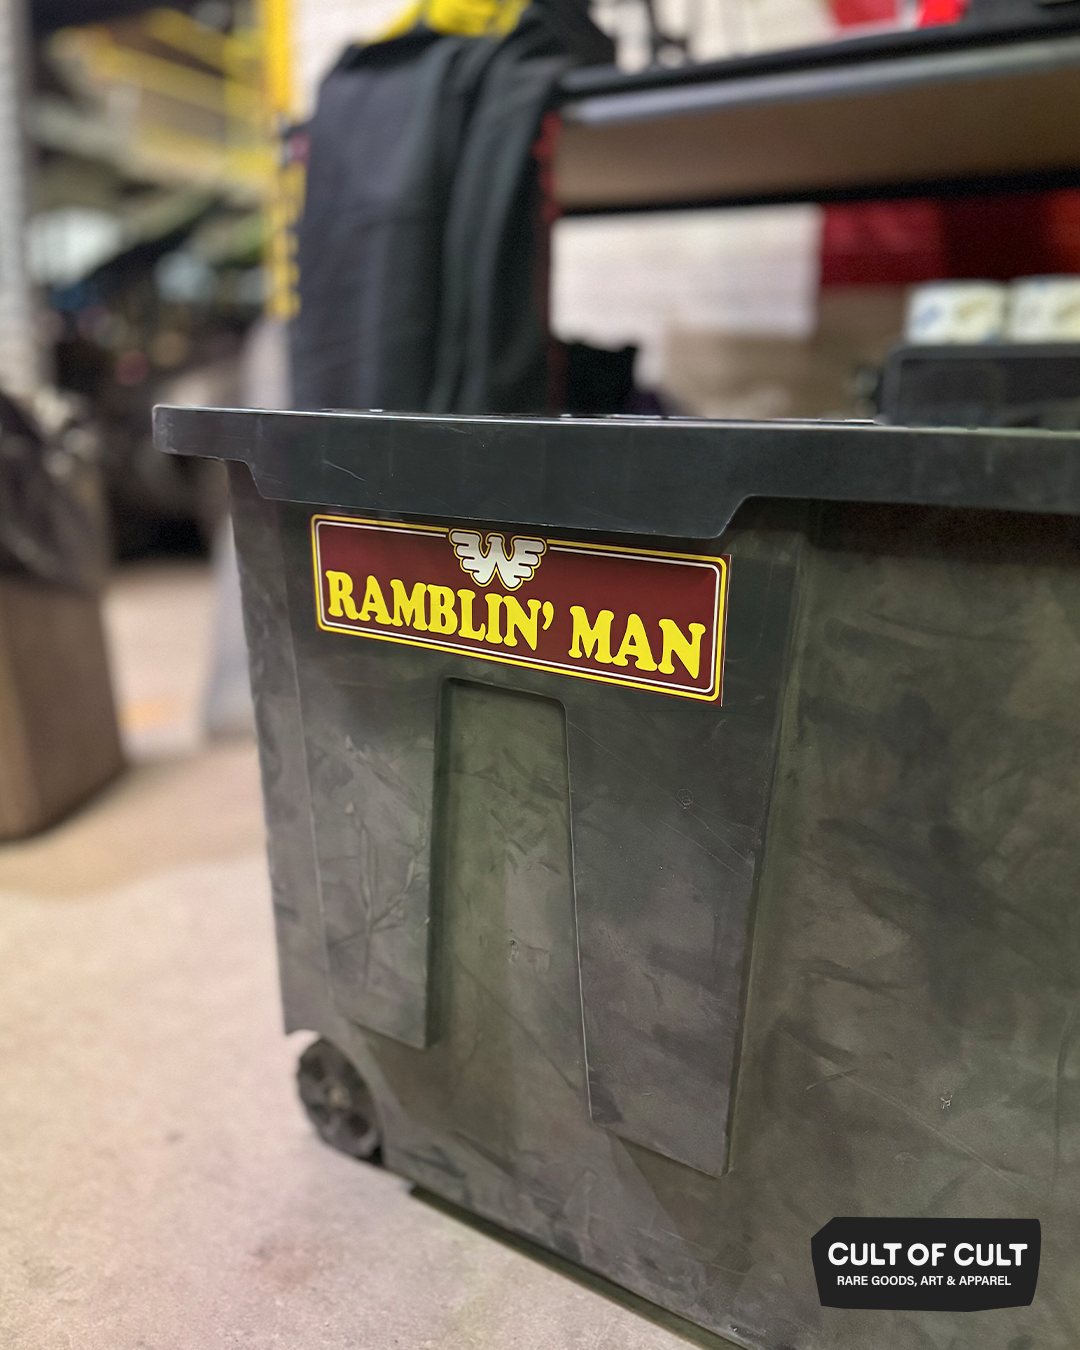 The Ramblin Man Waylon Jennings bumper sticker shown on a large black tote